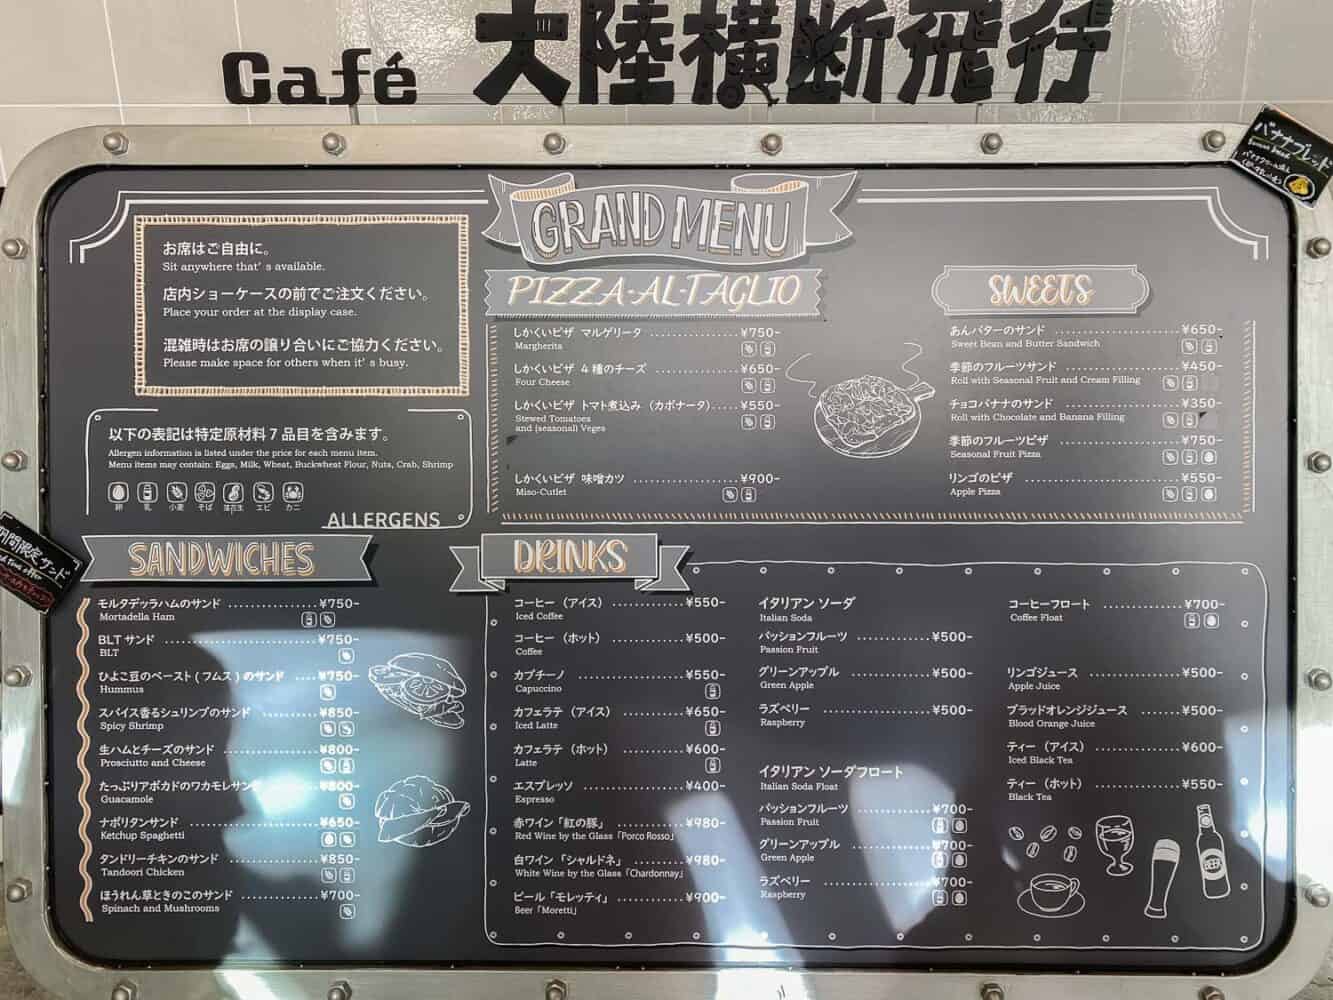 Transcontinental Flight Café menu, Ghibli Park, Japan